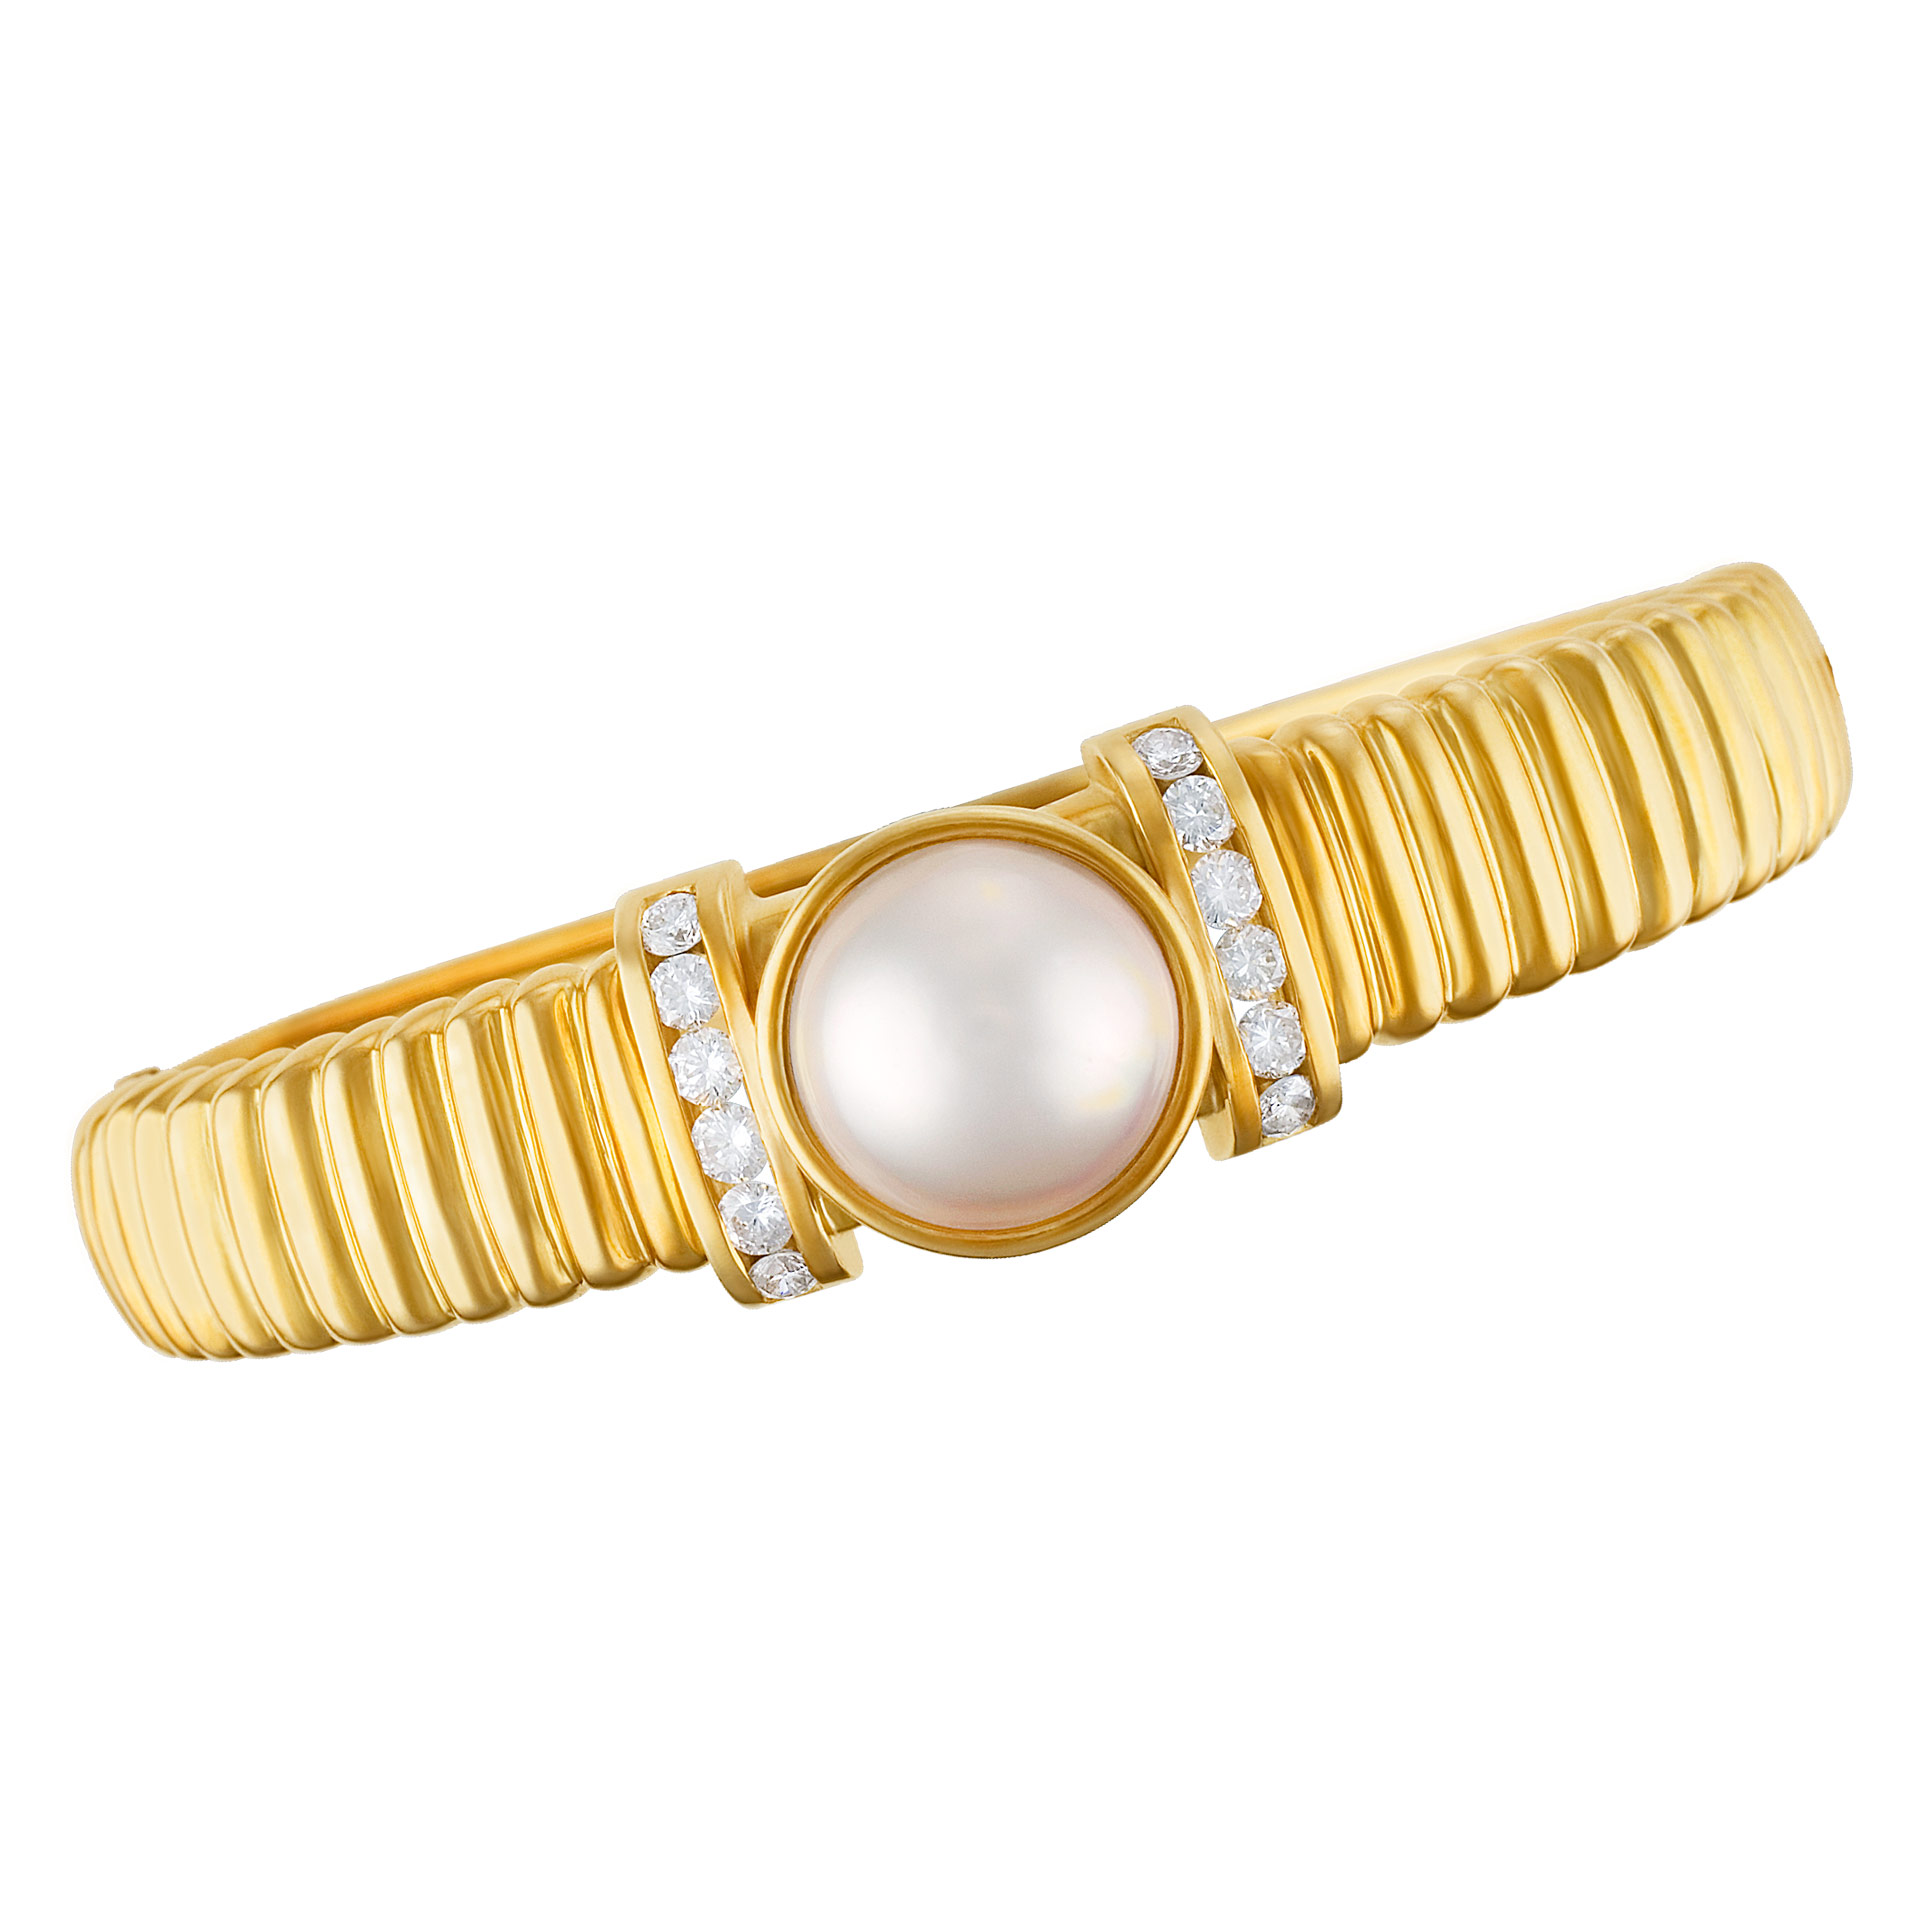 Mobe pearl and diamond bangle in 18k yellow gold. 1.00 carats in diamonds image 1